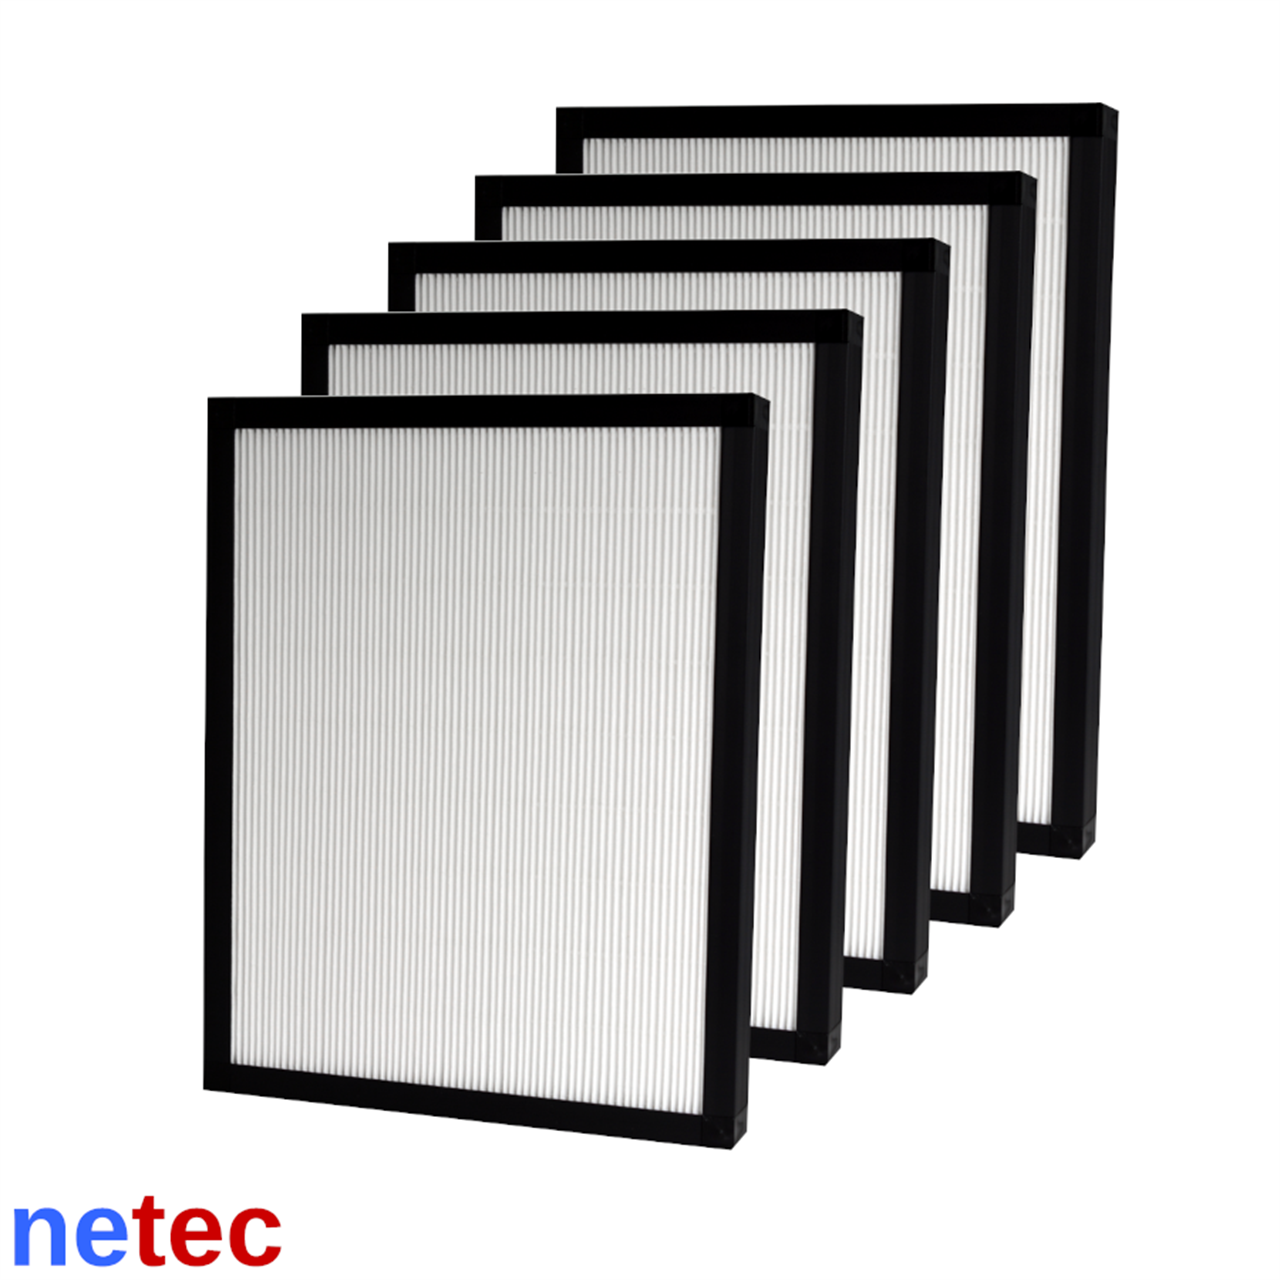 S0006.0656.5 Ersatzfilter F7 - 300 CD für Netec CWK 300-F-iso / Fibo 300 ab Baujahr 4/2014 5 Stück